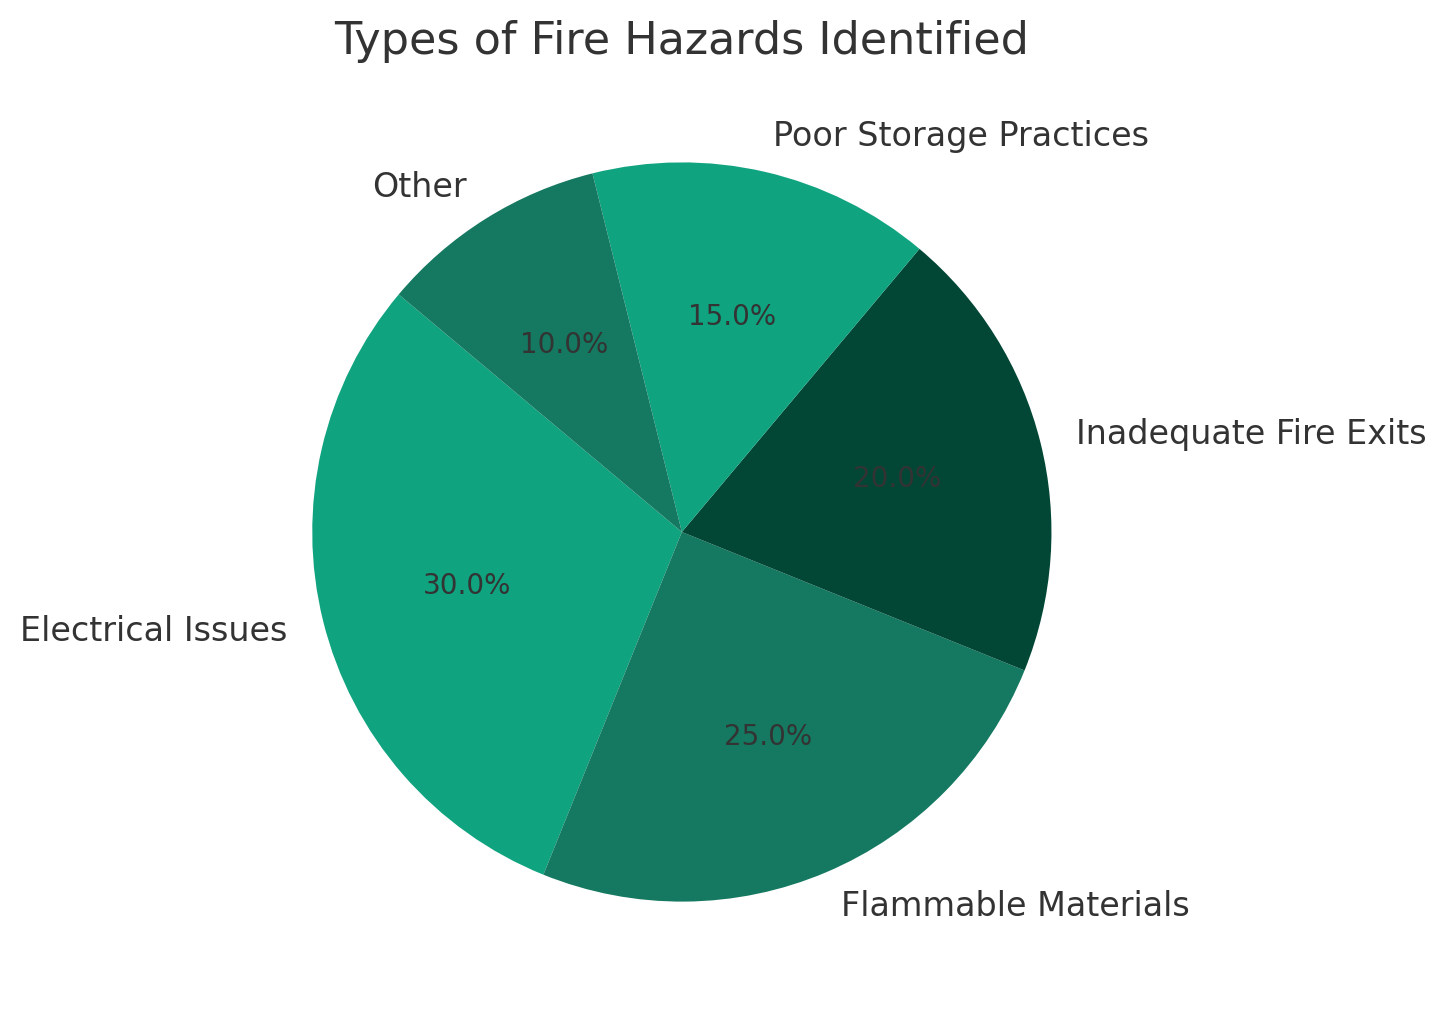 Types of hazard to identify